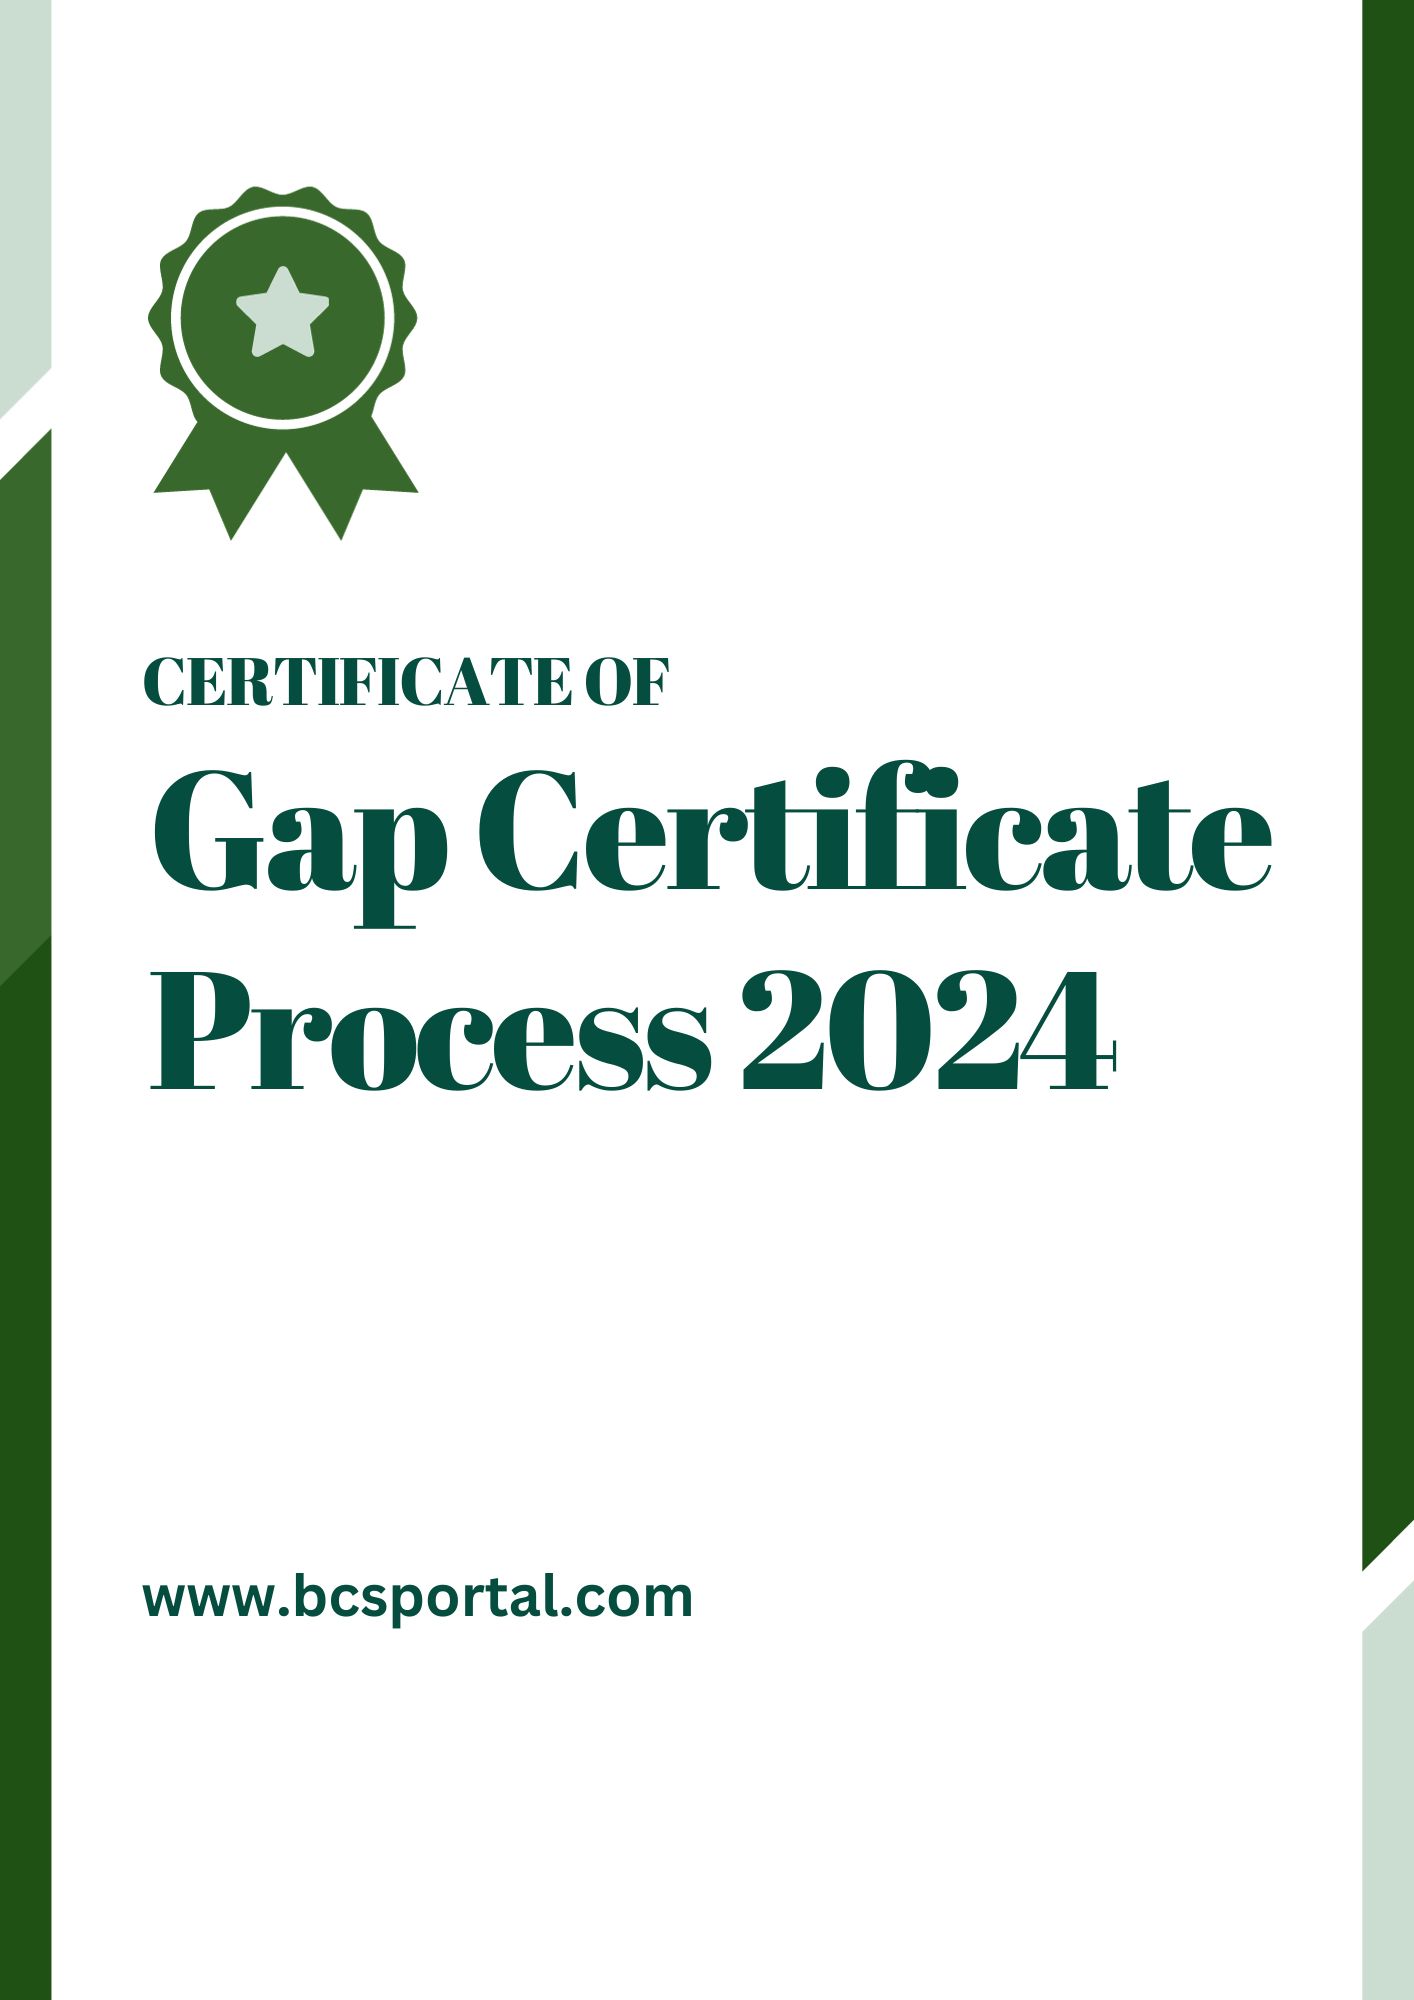 Gap Certificate Process